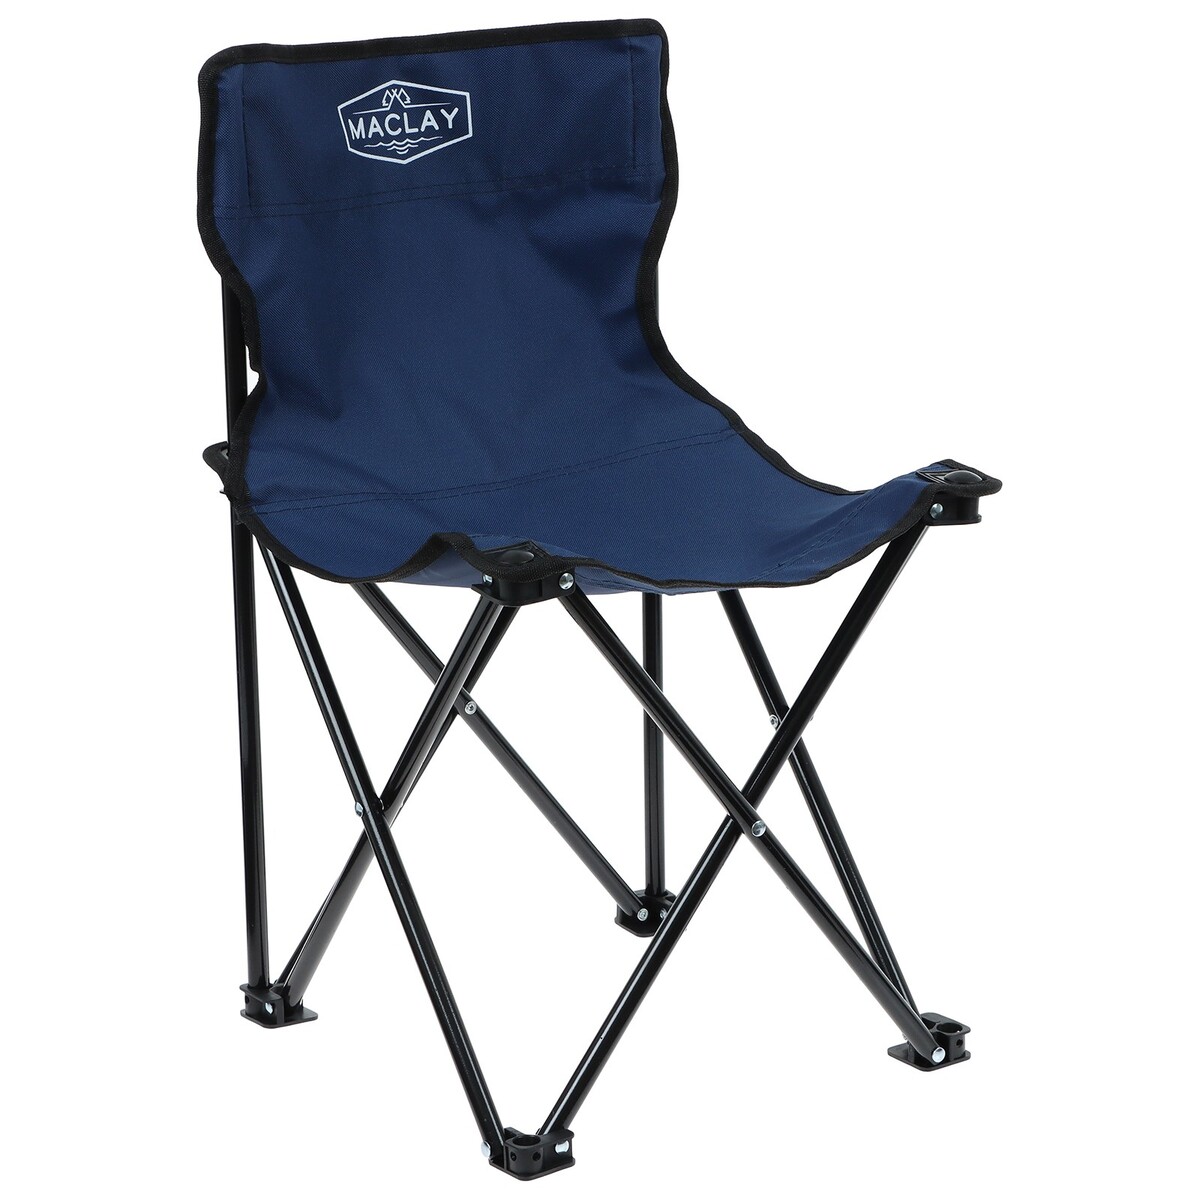 Кресло туристическое, складное, до 80 кг, размер 35 х 35 х 56 см, цвет синий Maclay 02005665 - фото 1